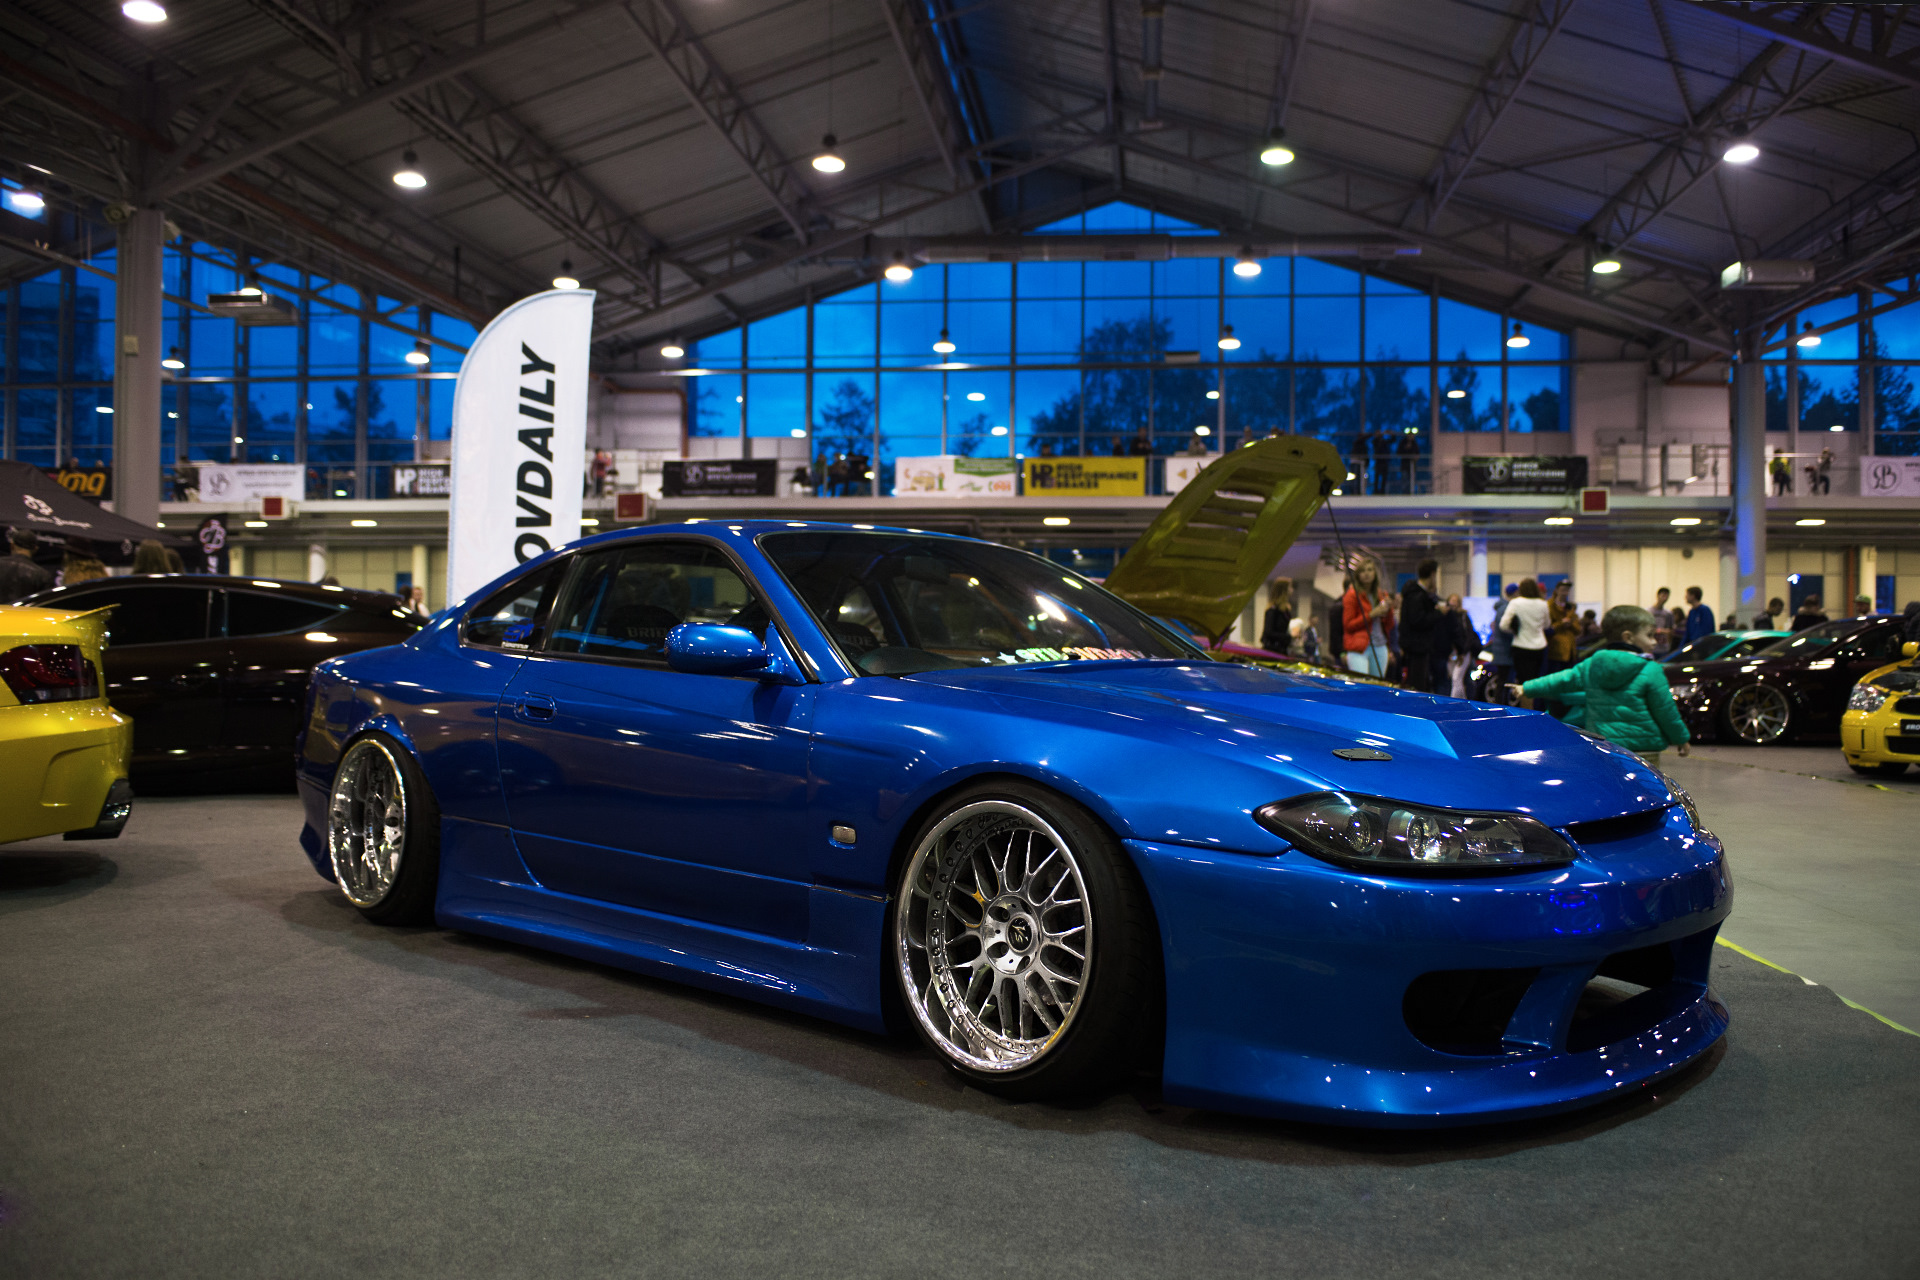 Silvia s15 купить. Nissan Silvia s15 Aero. Silvia s15 темно синяя. Nissan Silvia s15 синий цвет. Nissan Silvia s15 Aero Kit.